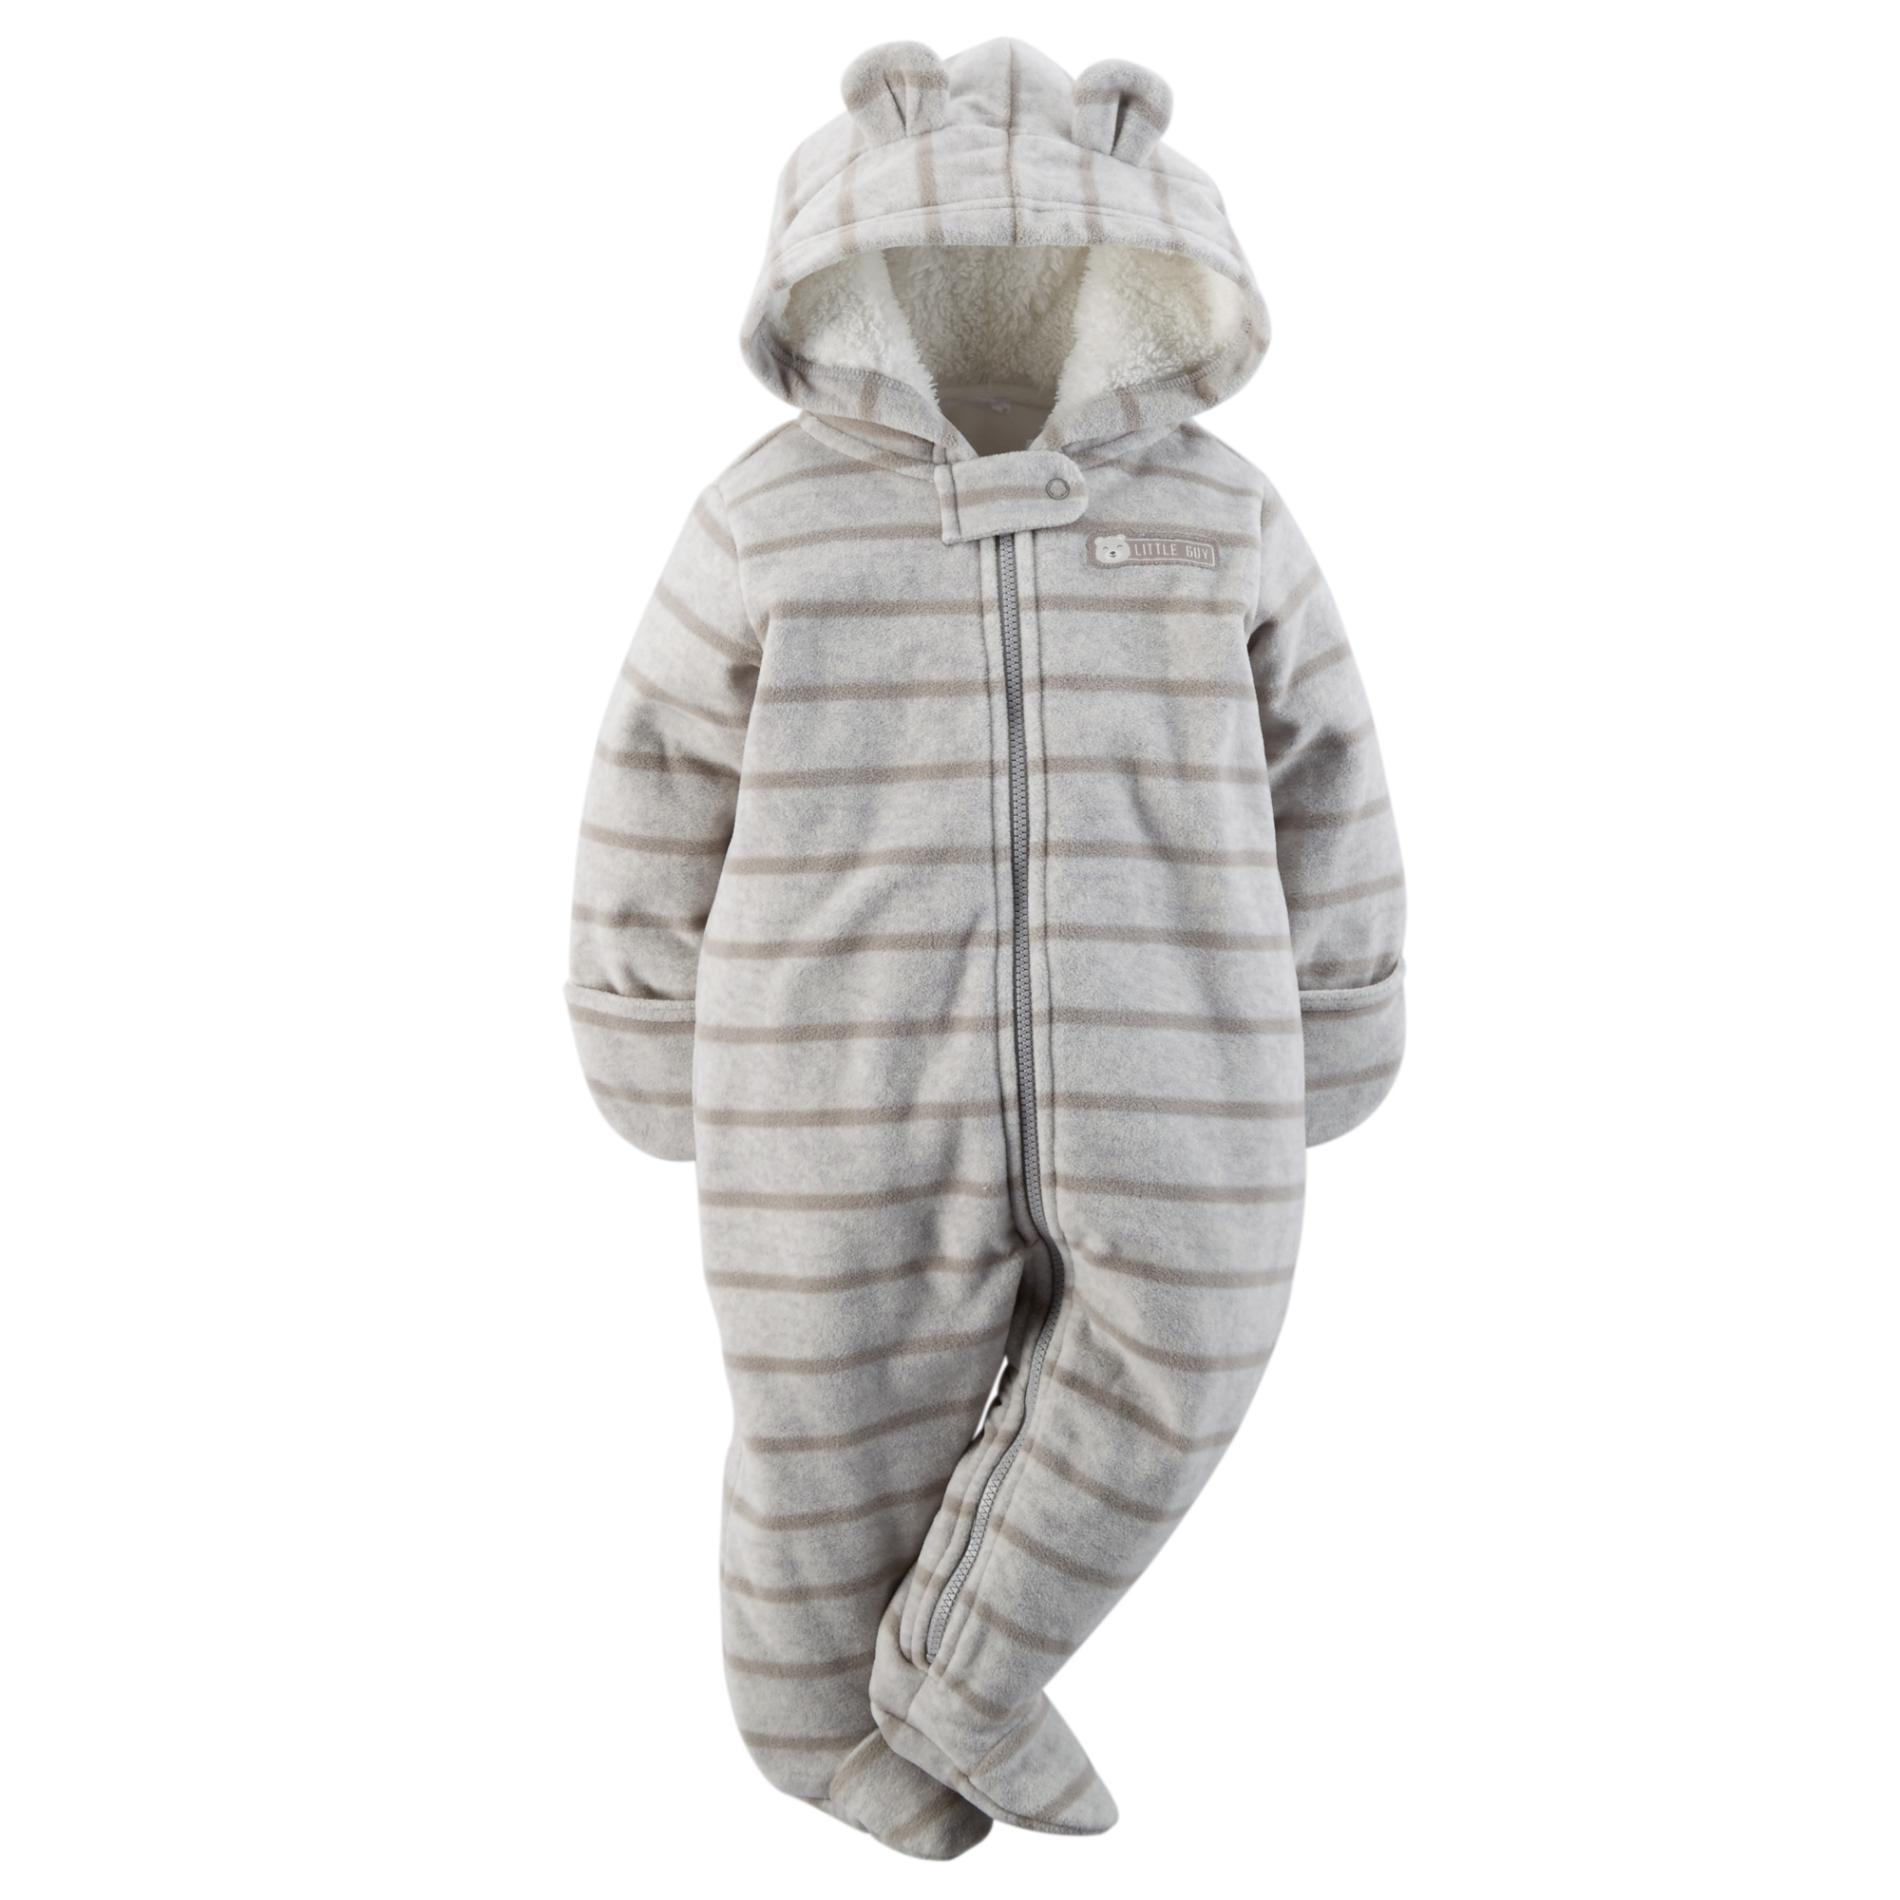 Carter's Newborn Boy's Fleece Hooded Pram Suit - Striped